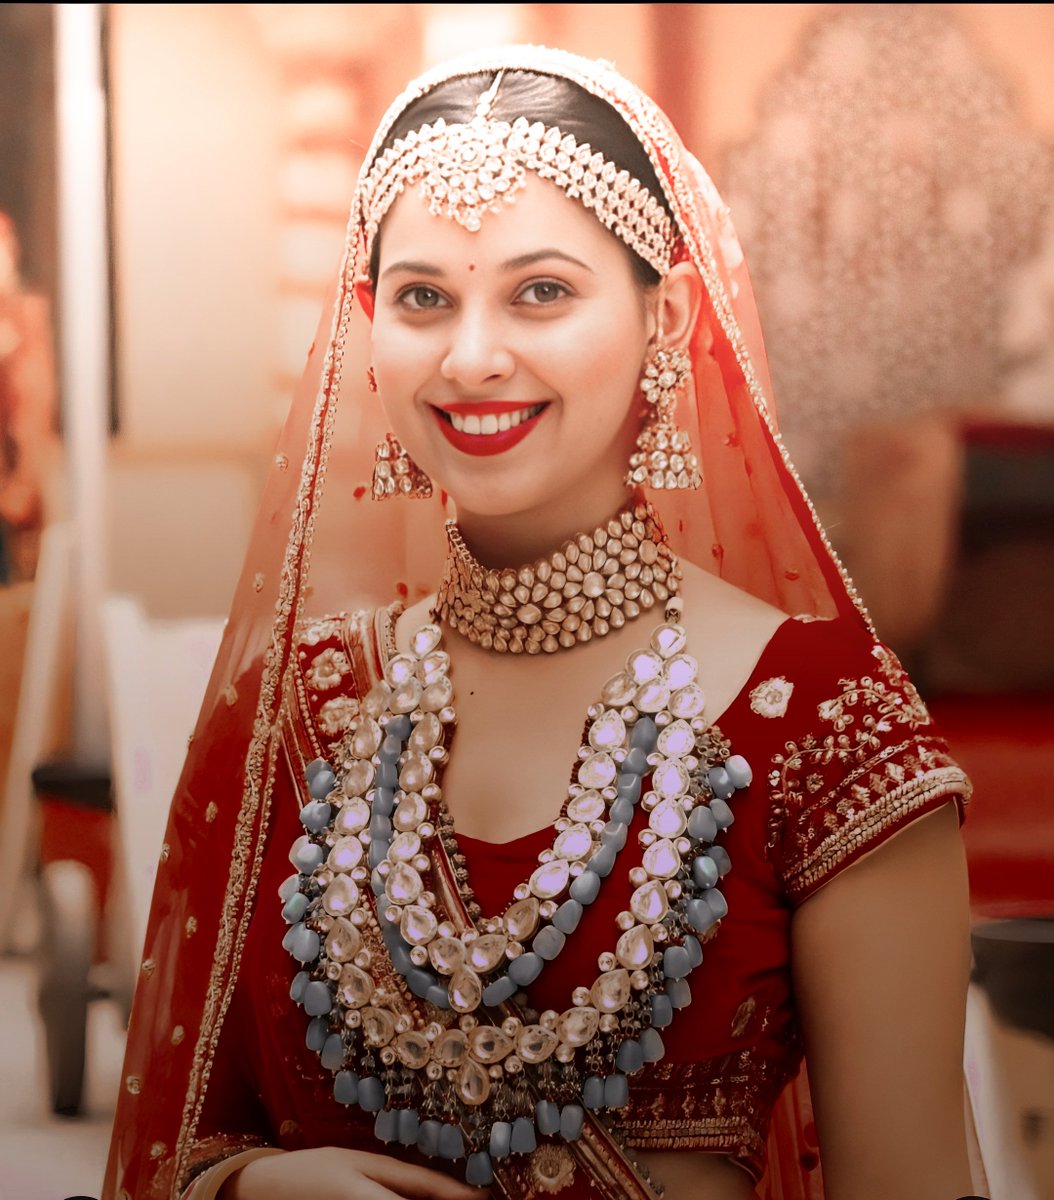 The most beautiful bride fr 💕

#AliceKaushik #raavipandya